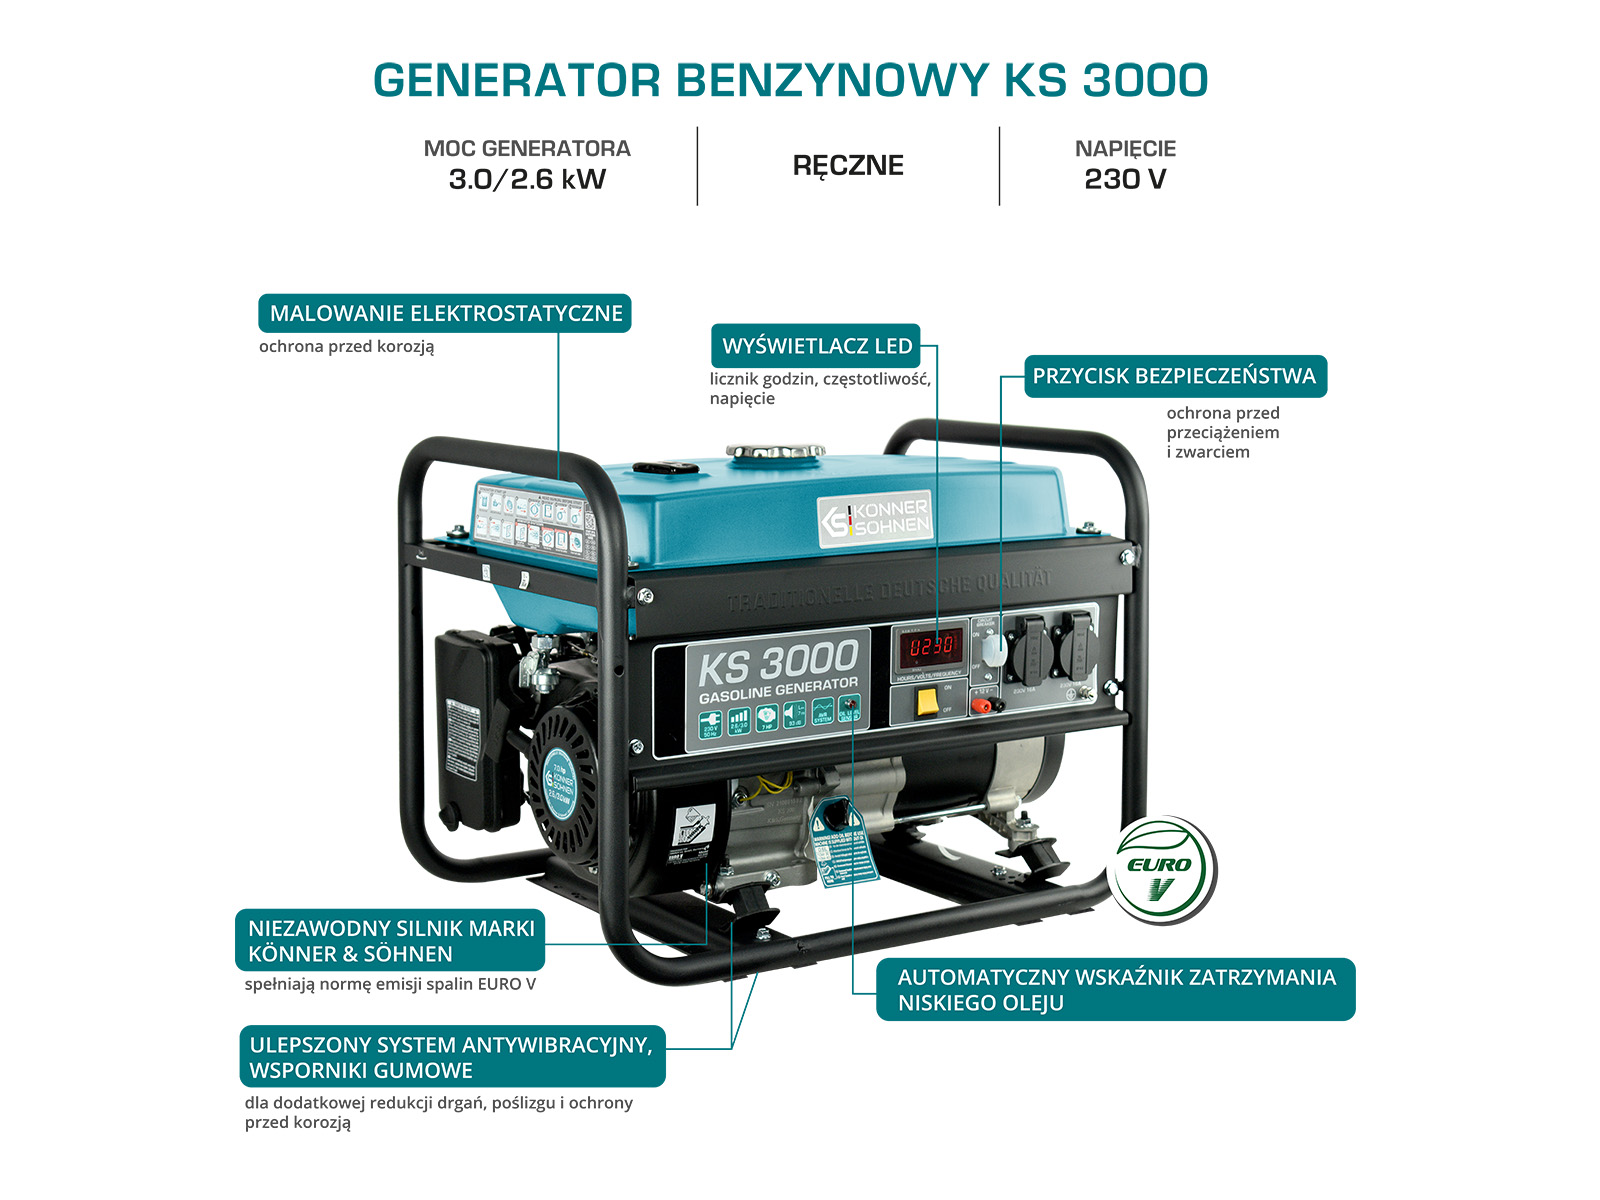 Generator benzynowy "Könner & Söhnen" KS 3000E